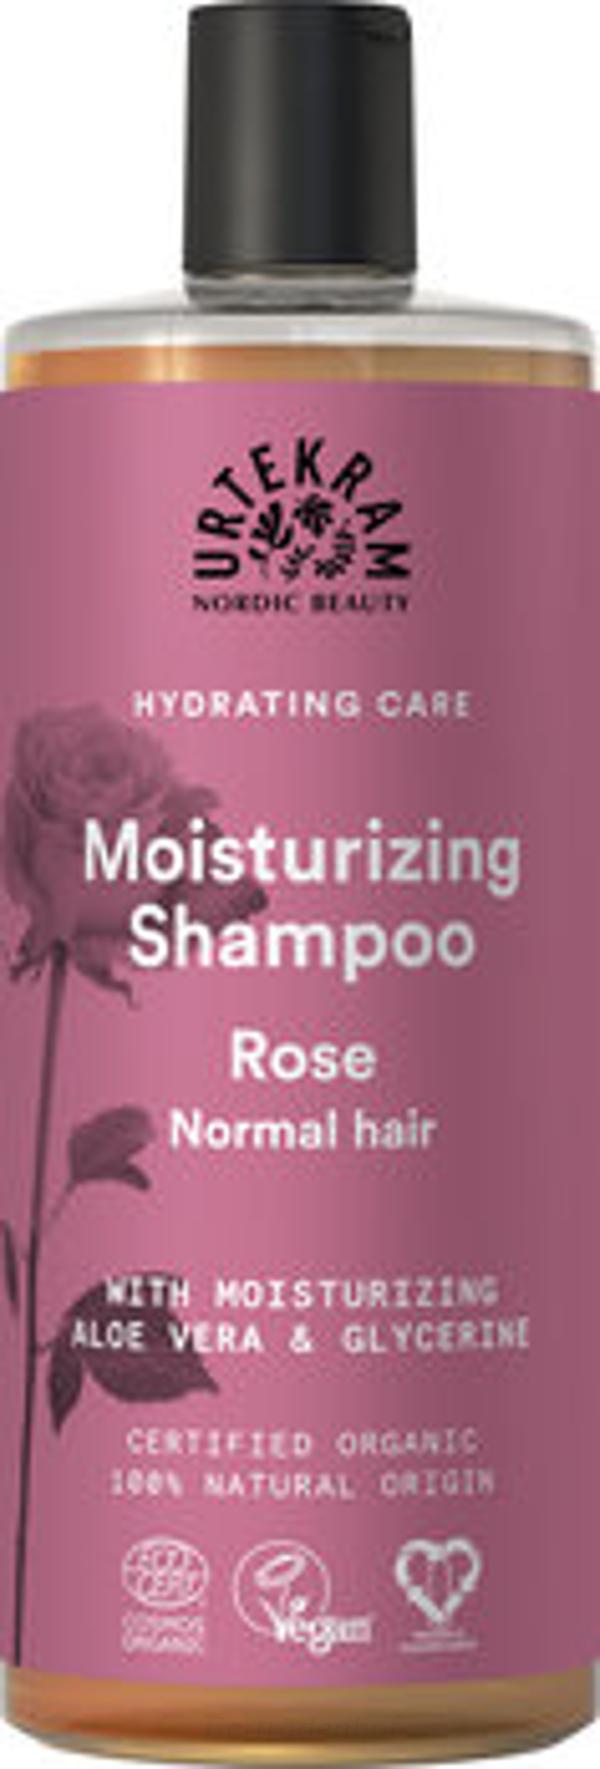 Produktfoto zu Rose Shampoo 500 ml (URT)